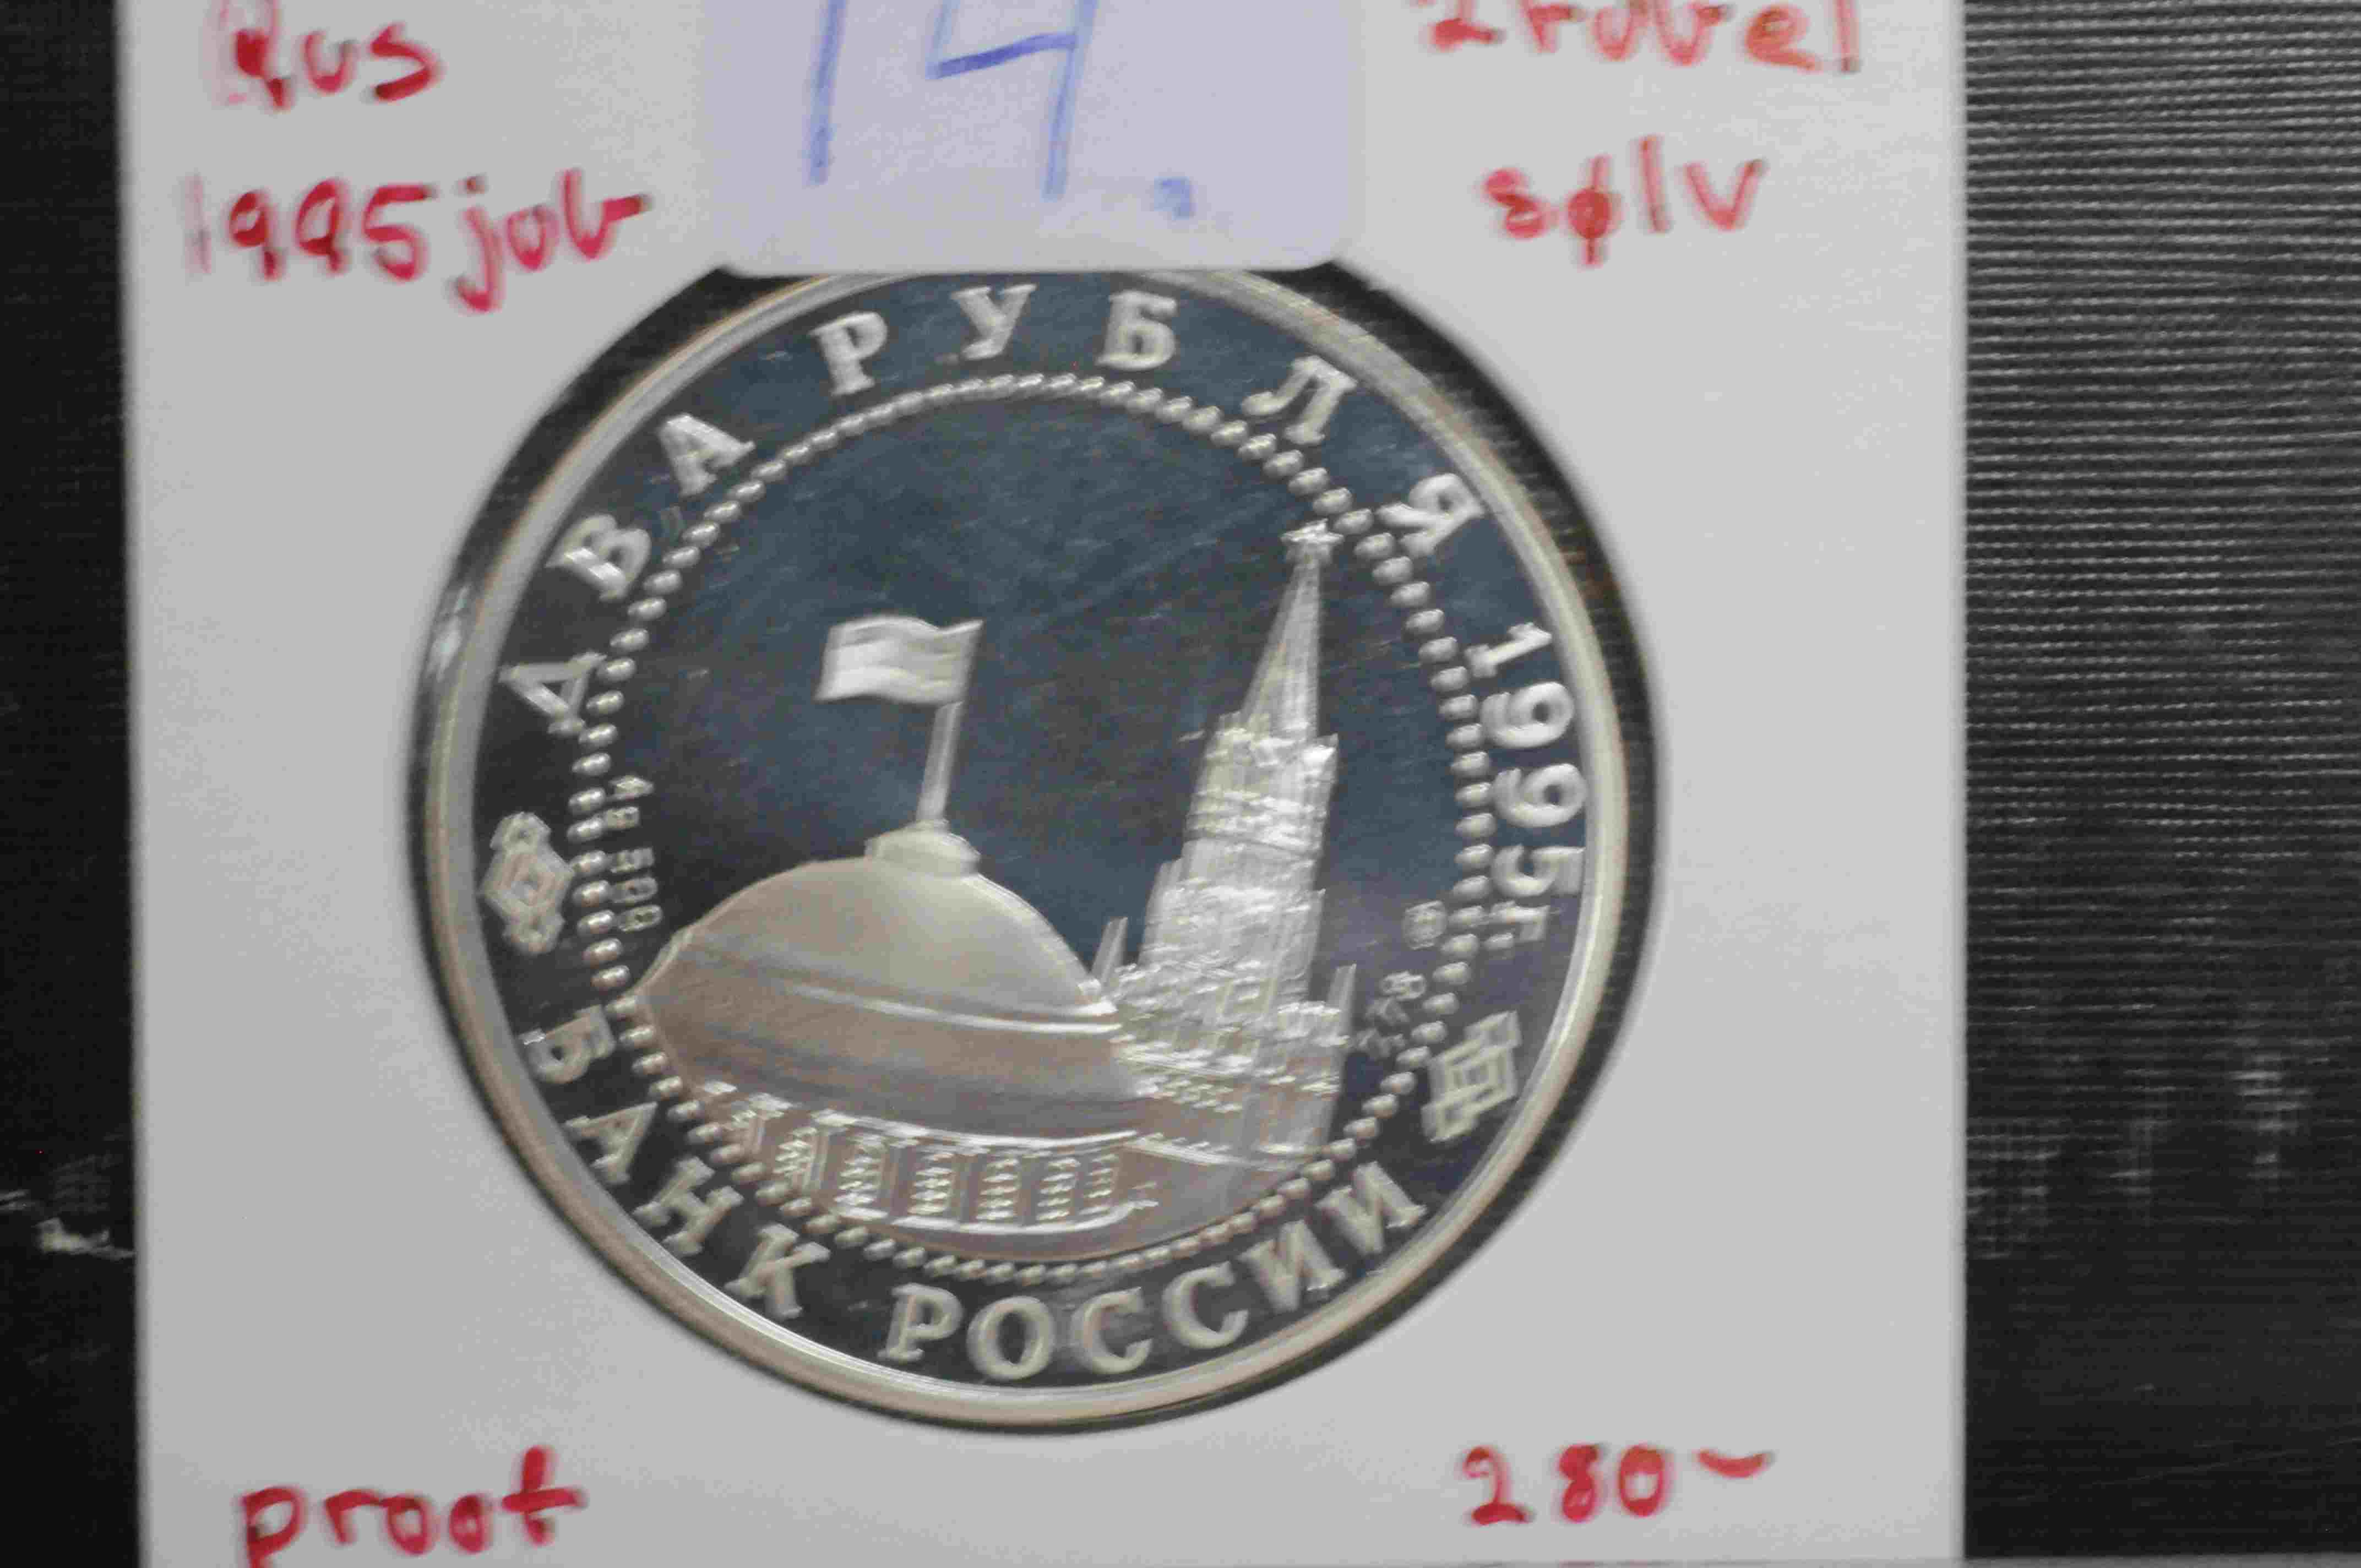 Russland 1995 jub 2 rubel sølv proof